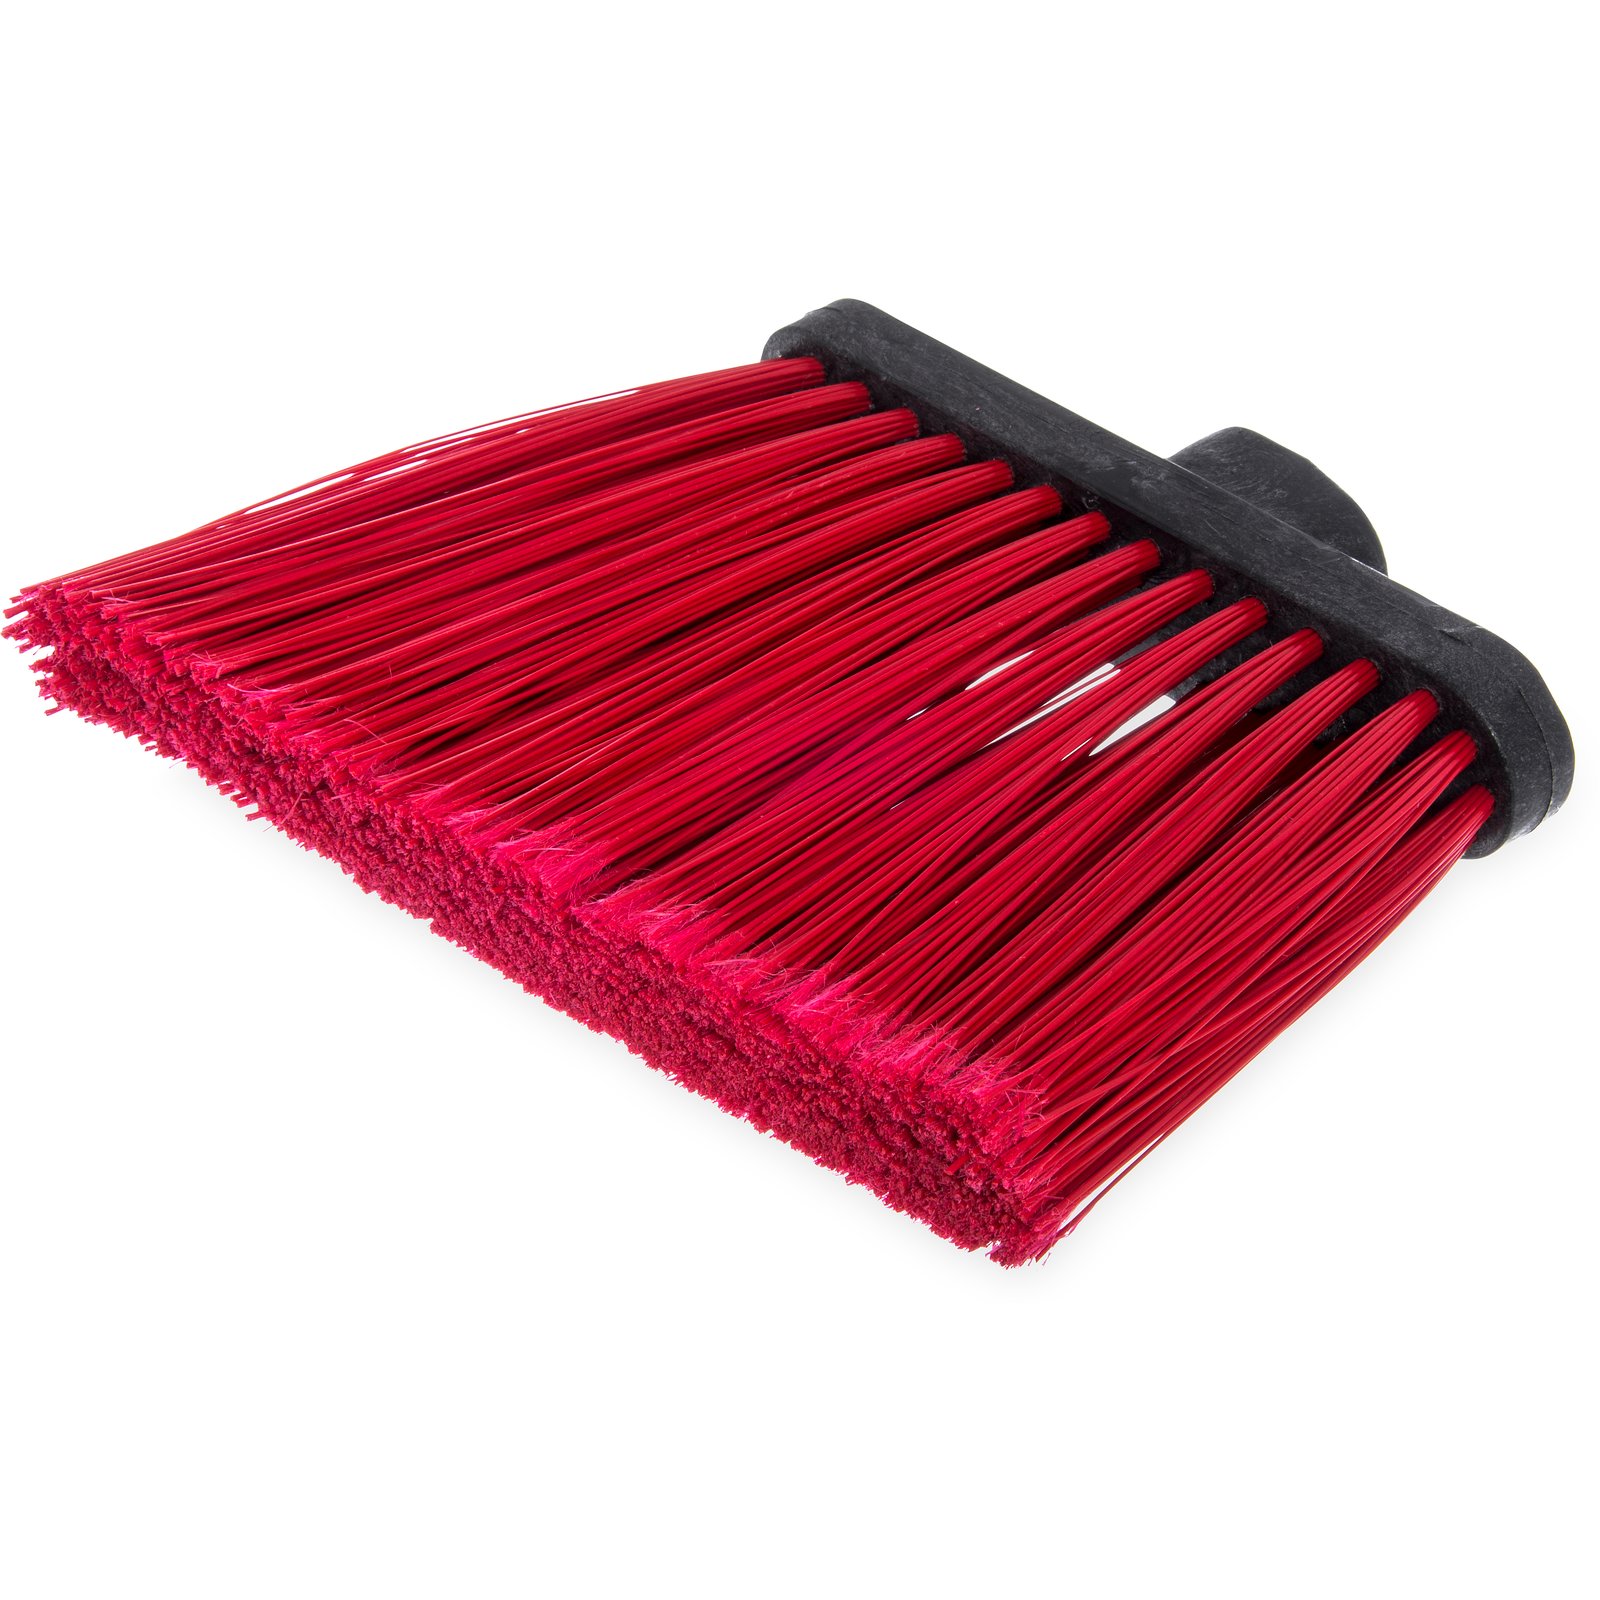 Carlisle 3686705 Duo-Sweep
Medium Duty Angled Broom Head
with Flagged Red Bristles,
(Each)